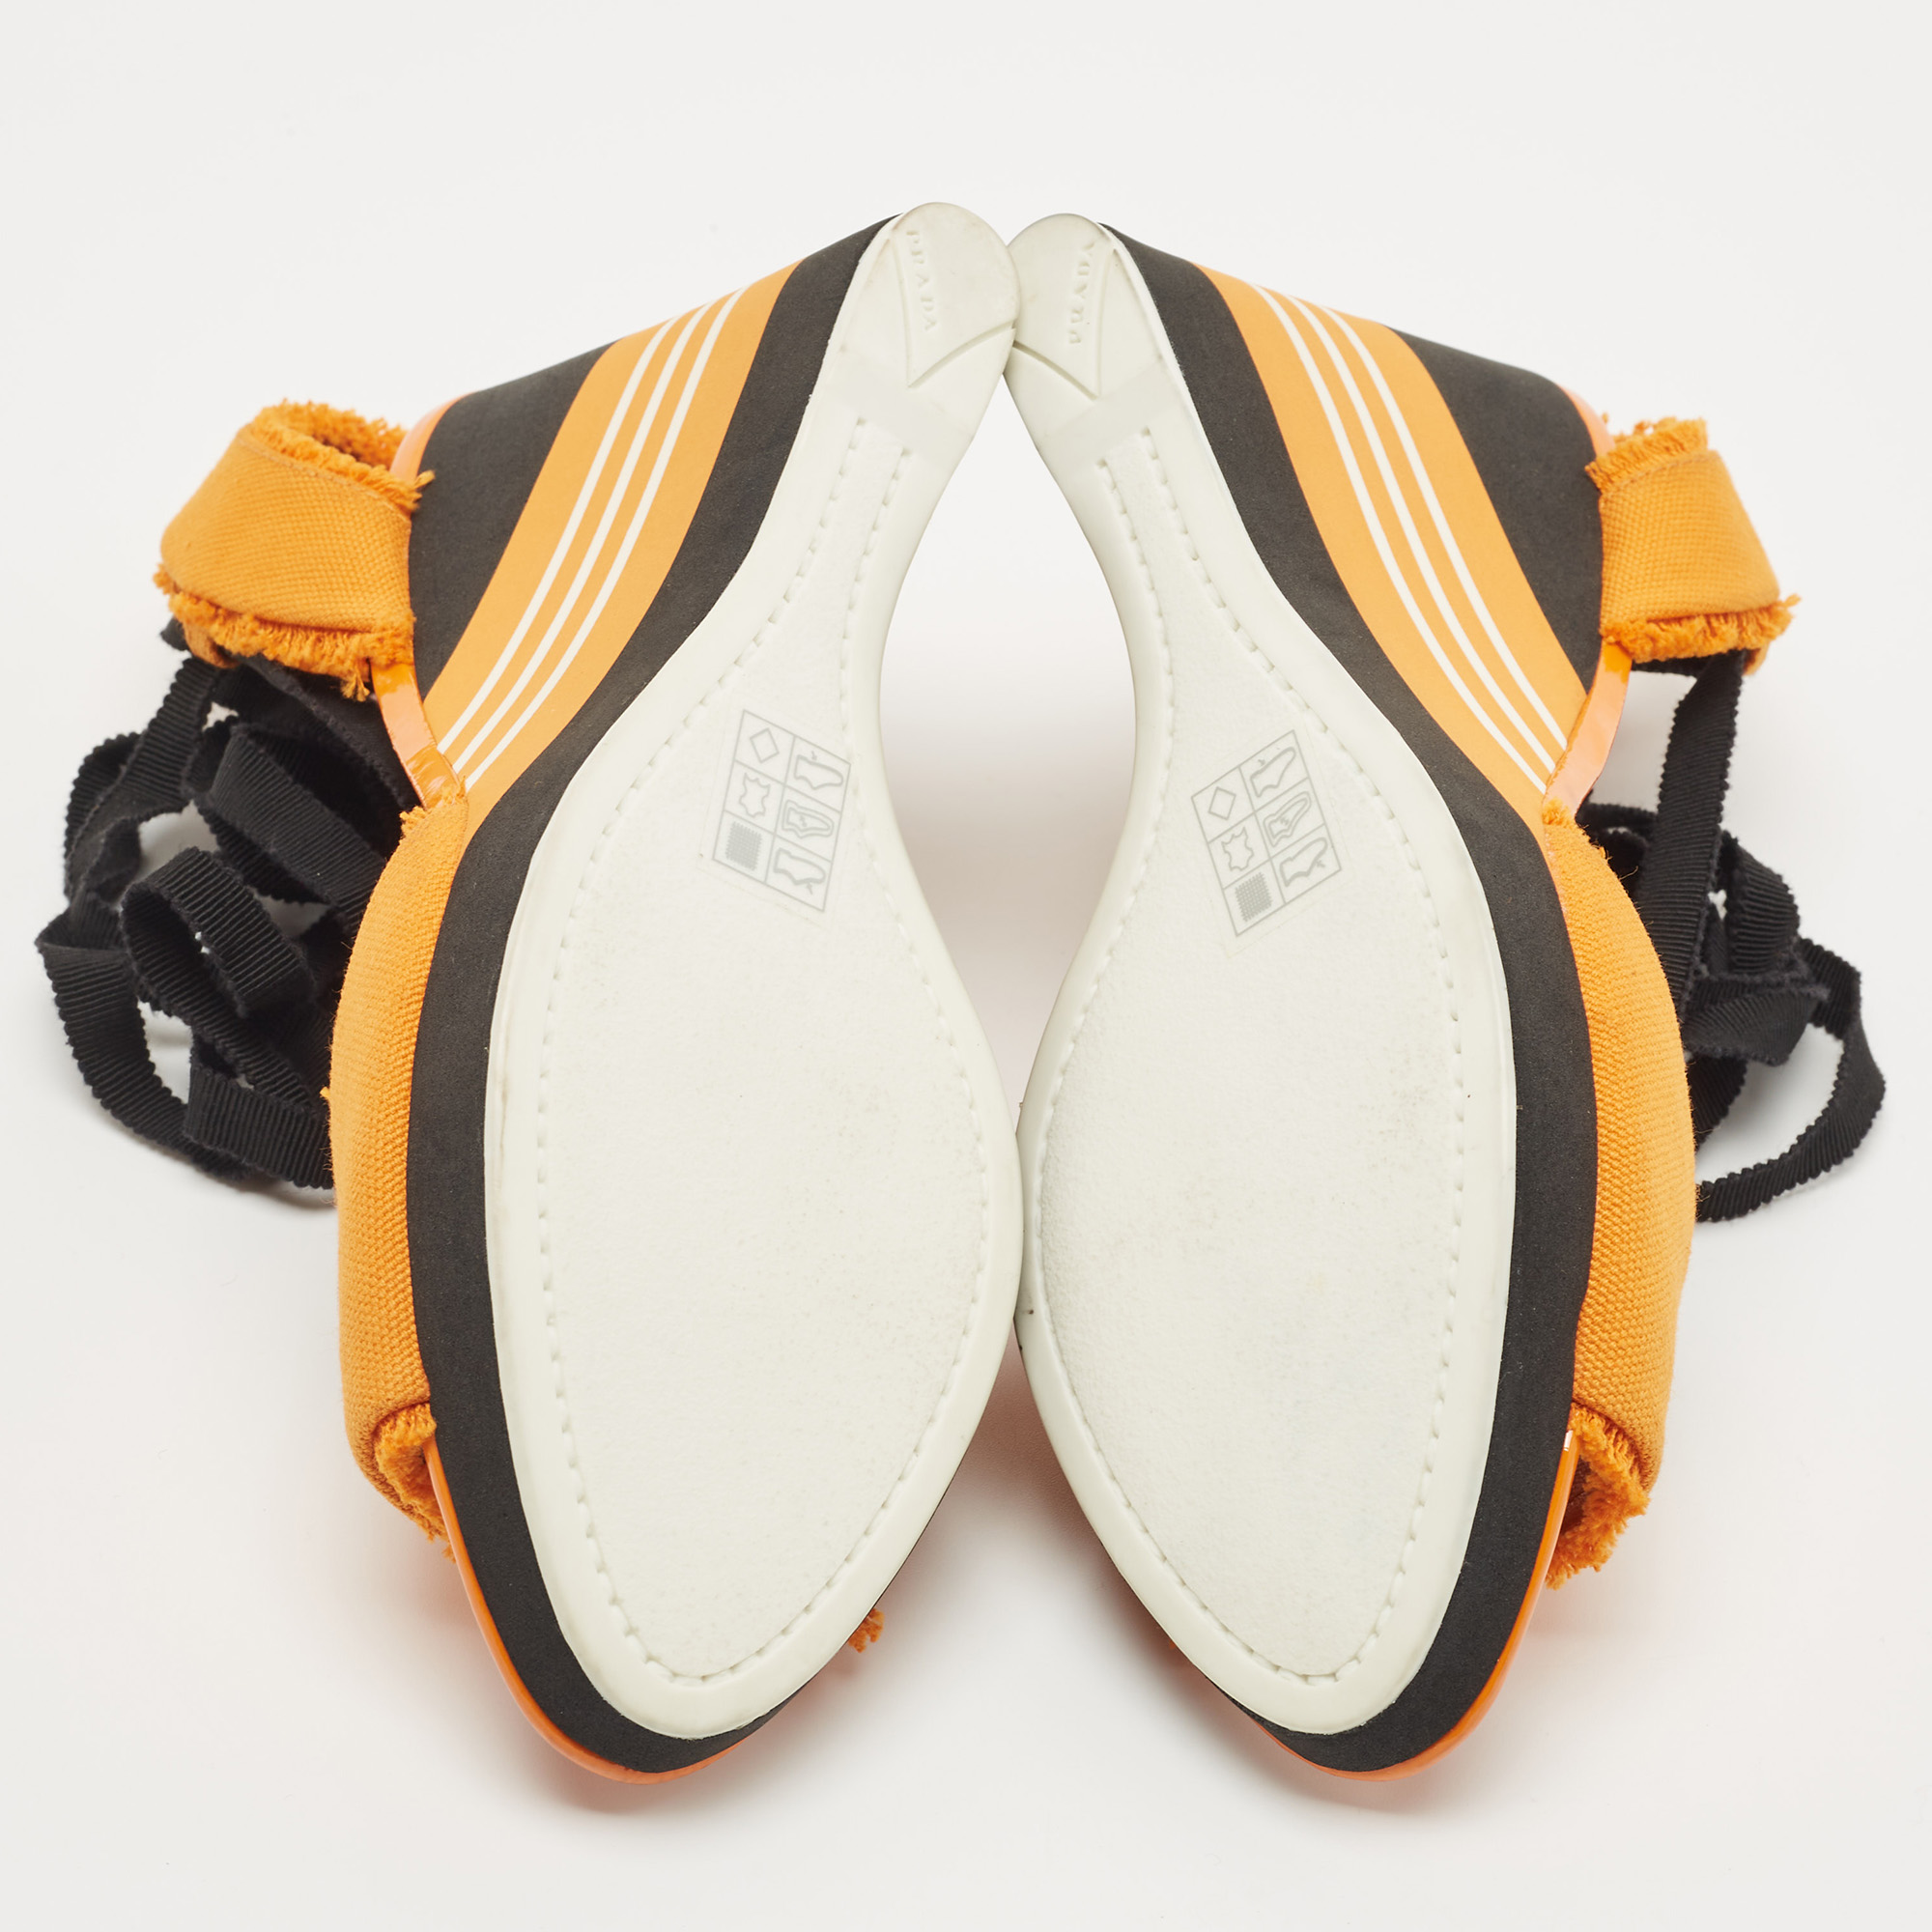 Prada Orange/Black Canvas Wedge Platform Ankle Wrap Sandals Size 38